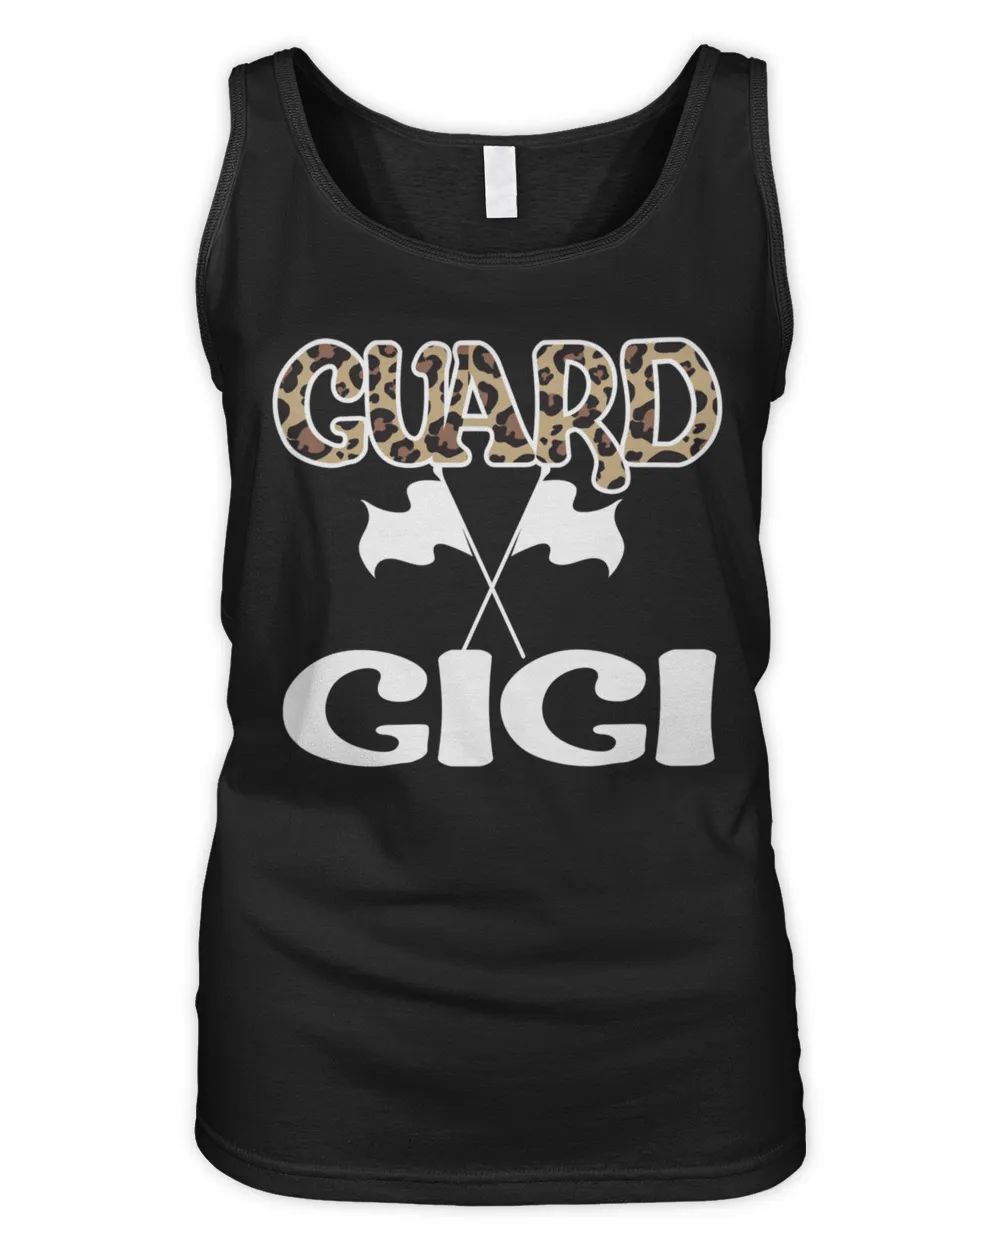 New guard gigi of a color guard member gigi grandma t-shirt